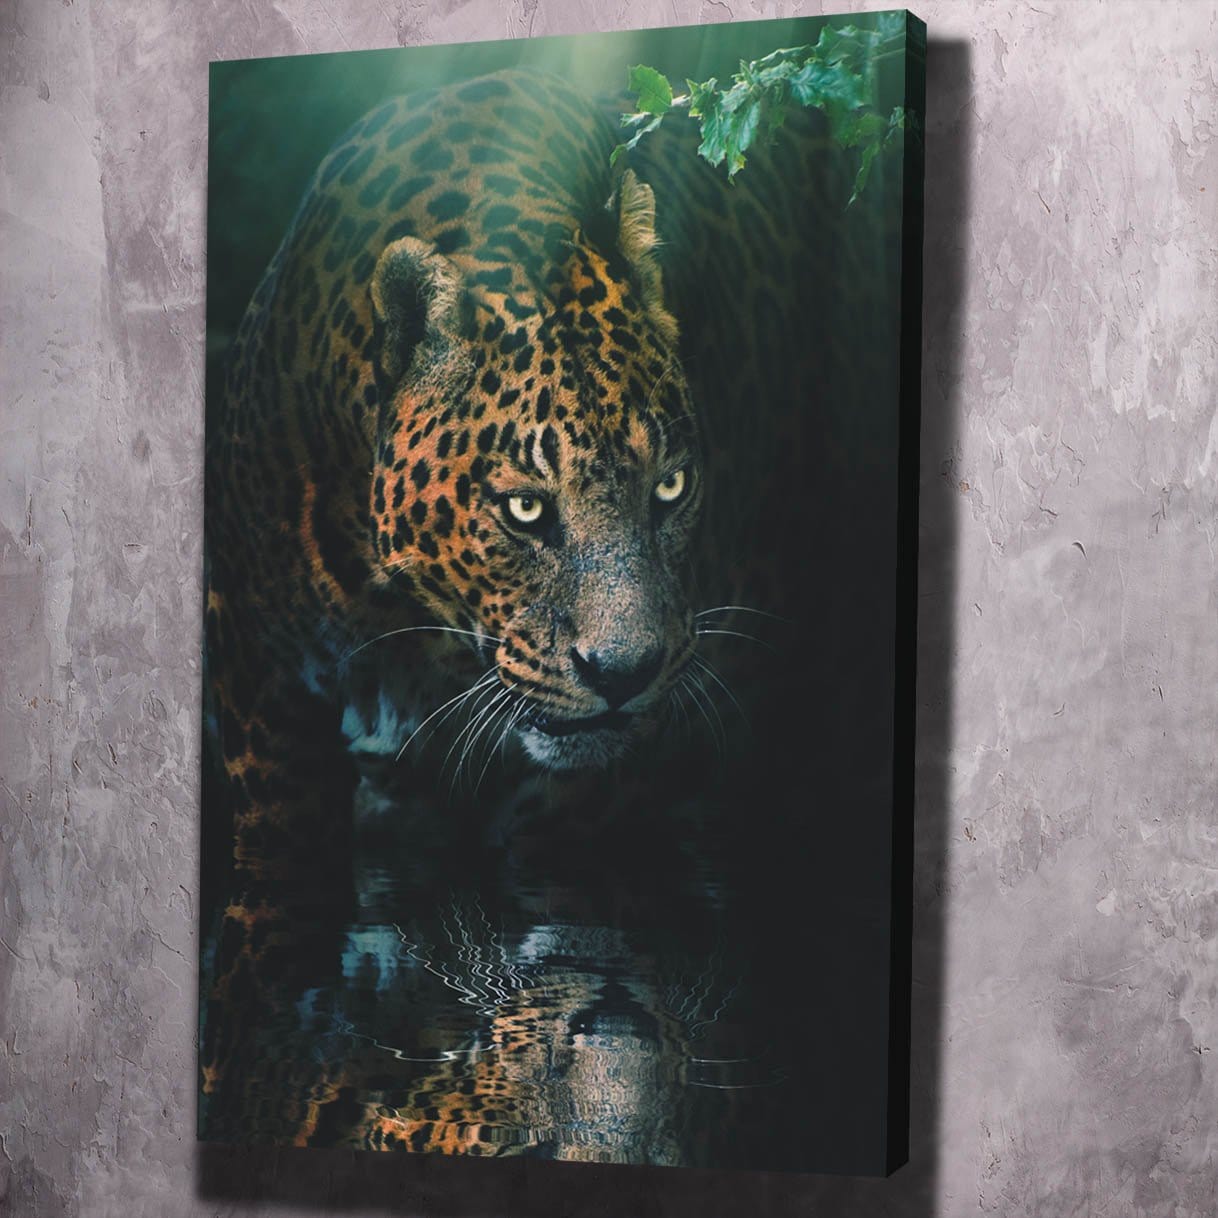 Jaguar Water Reflection Wall Art | Inspirational Wall Art Motivational Wall Art Quotes Office Art | ImpaktMaker Exclusive Canvas Art Portrait